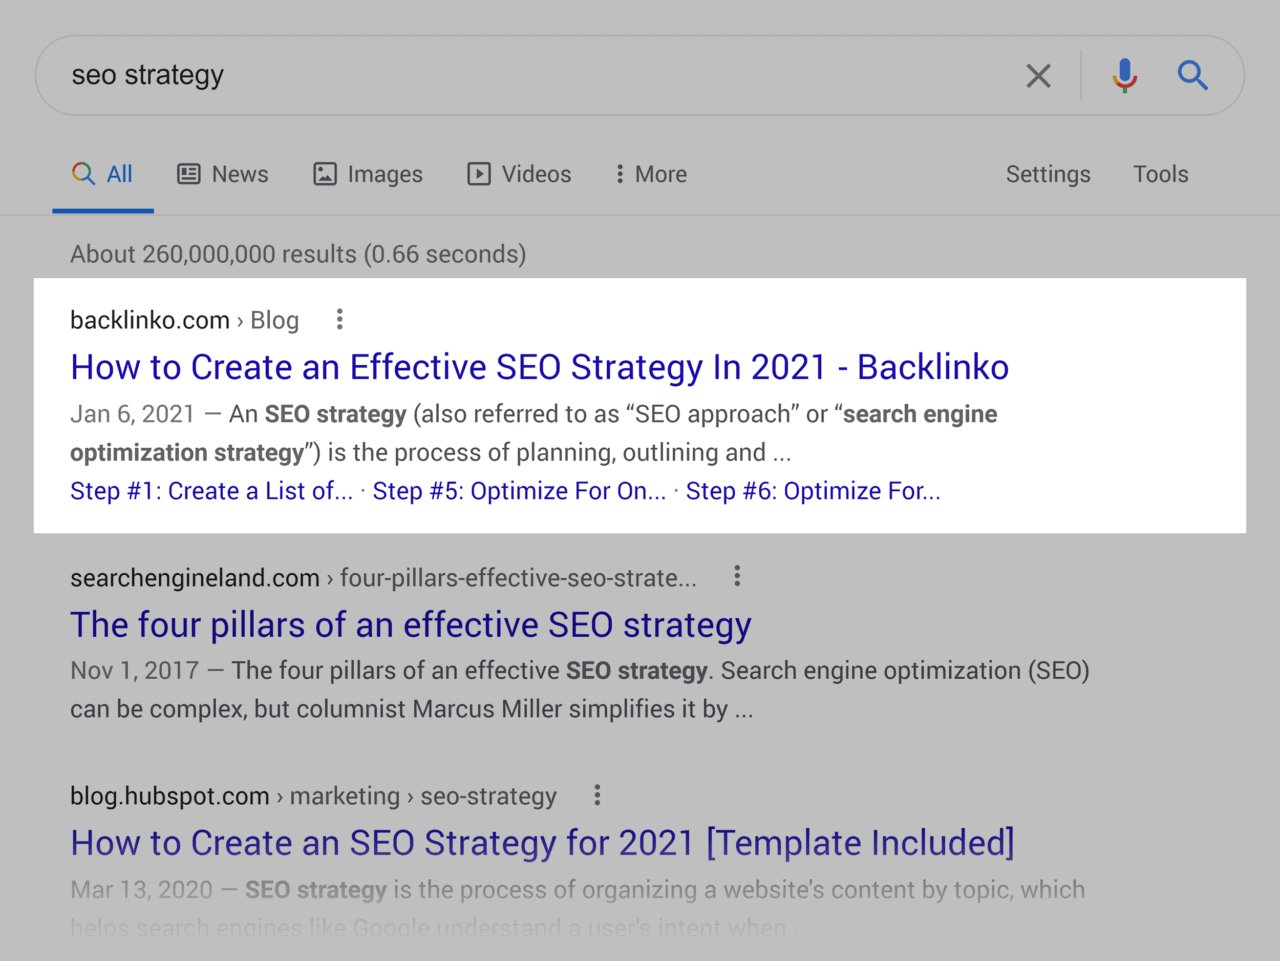 Backlinko's page ranking #1 for keyword "SEO strategy"